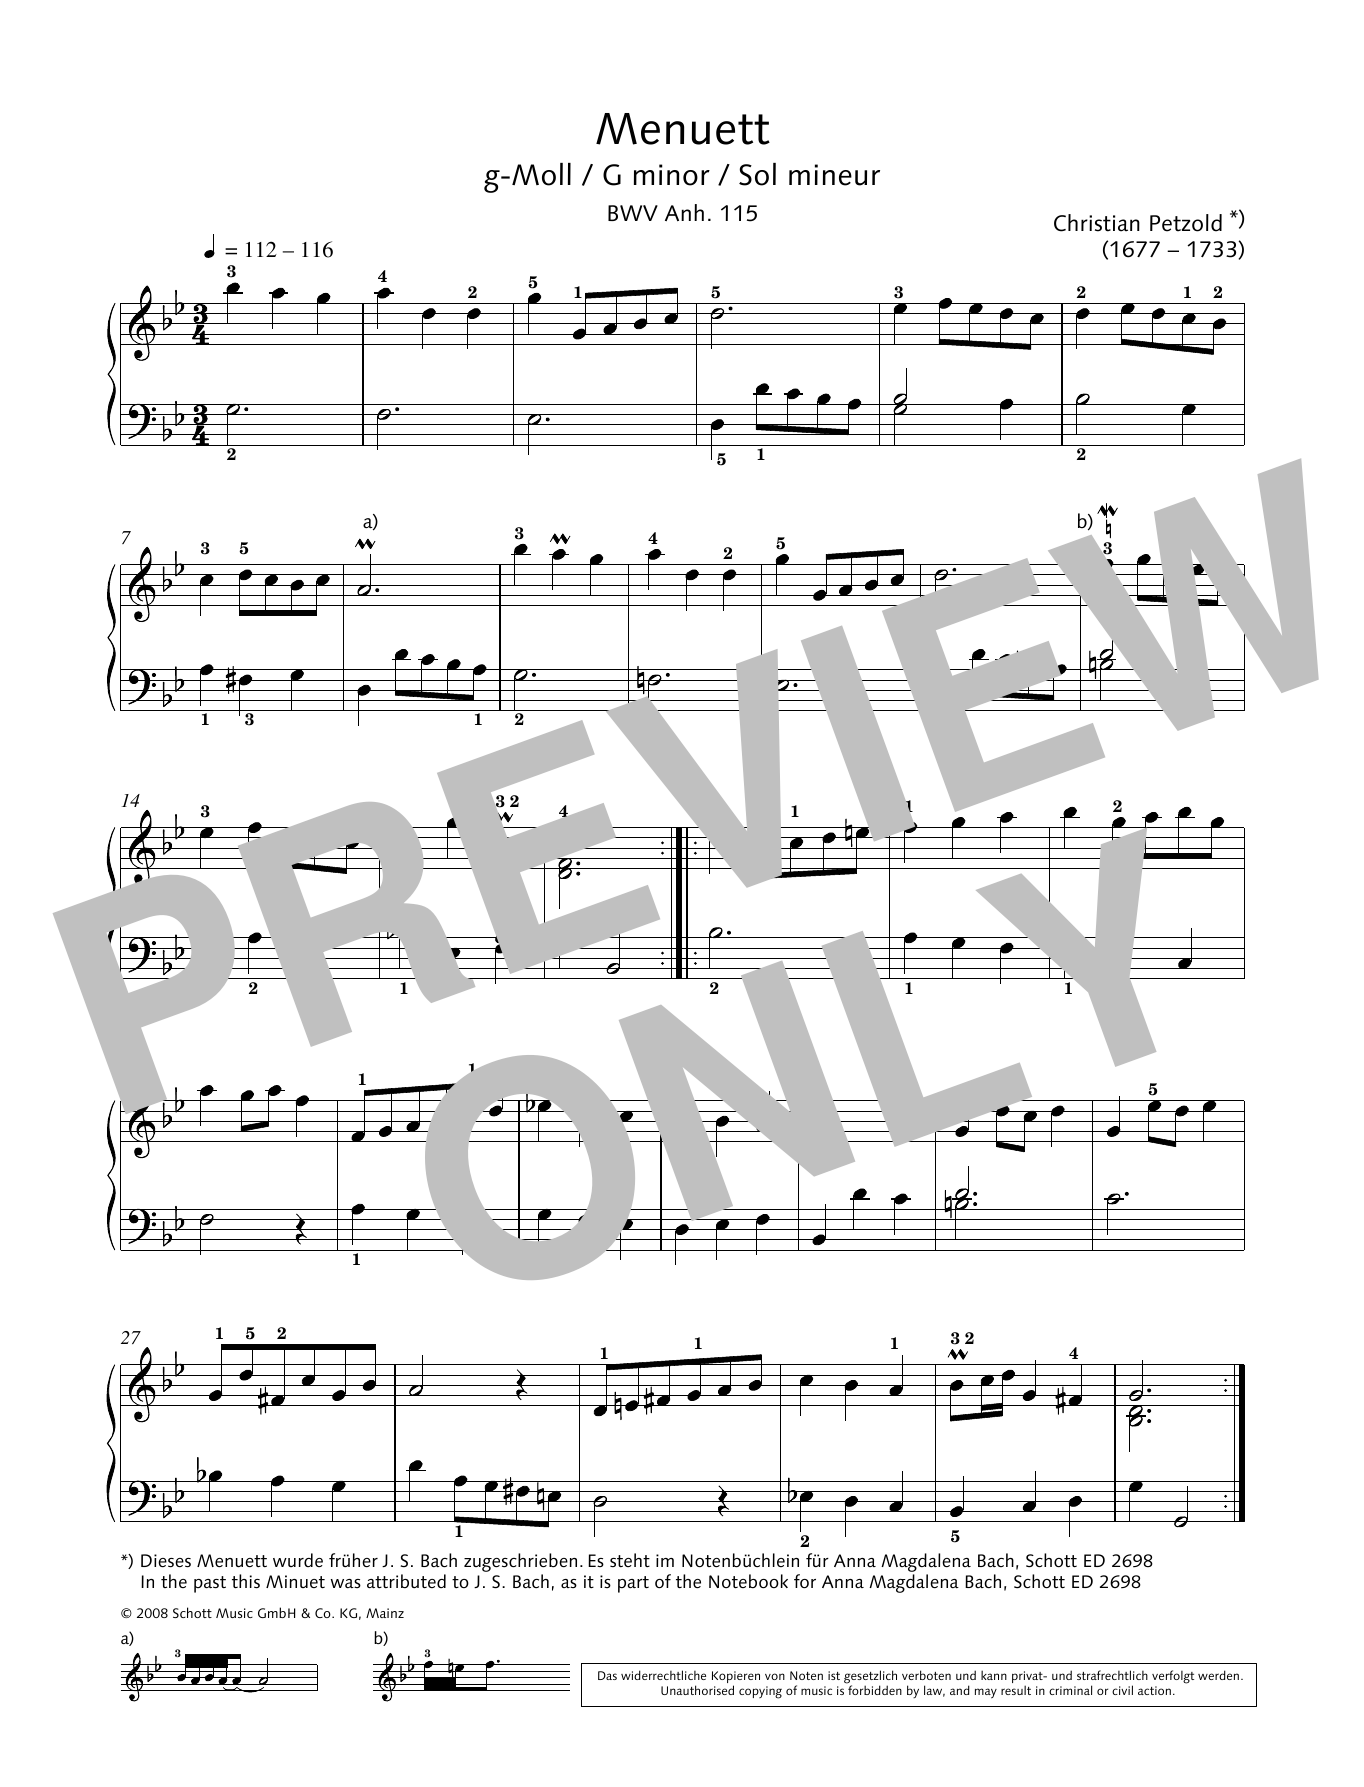 Christian Petzold Minuet In G Minor, BWV Anh. 115 sheet music notes printable PDF score